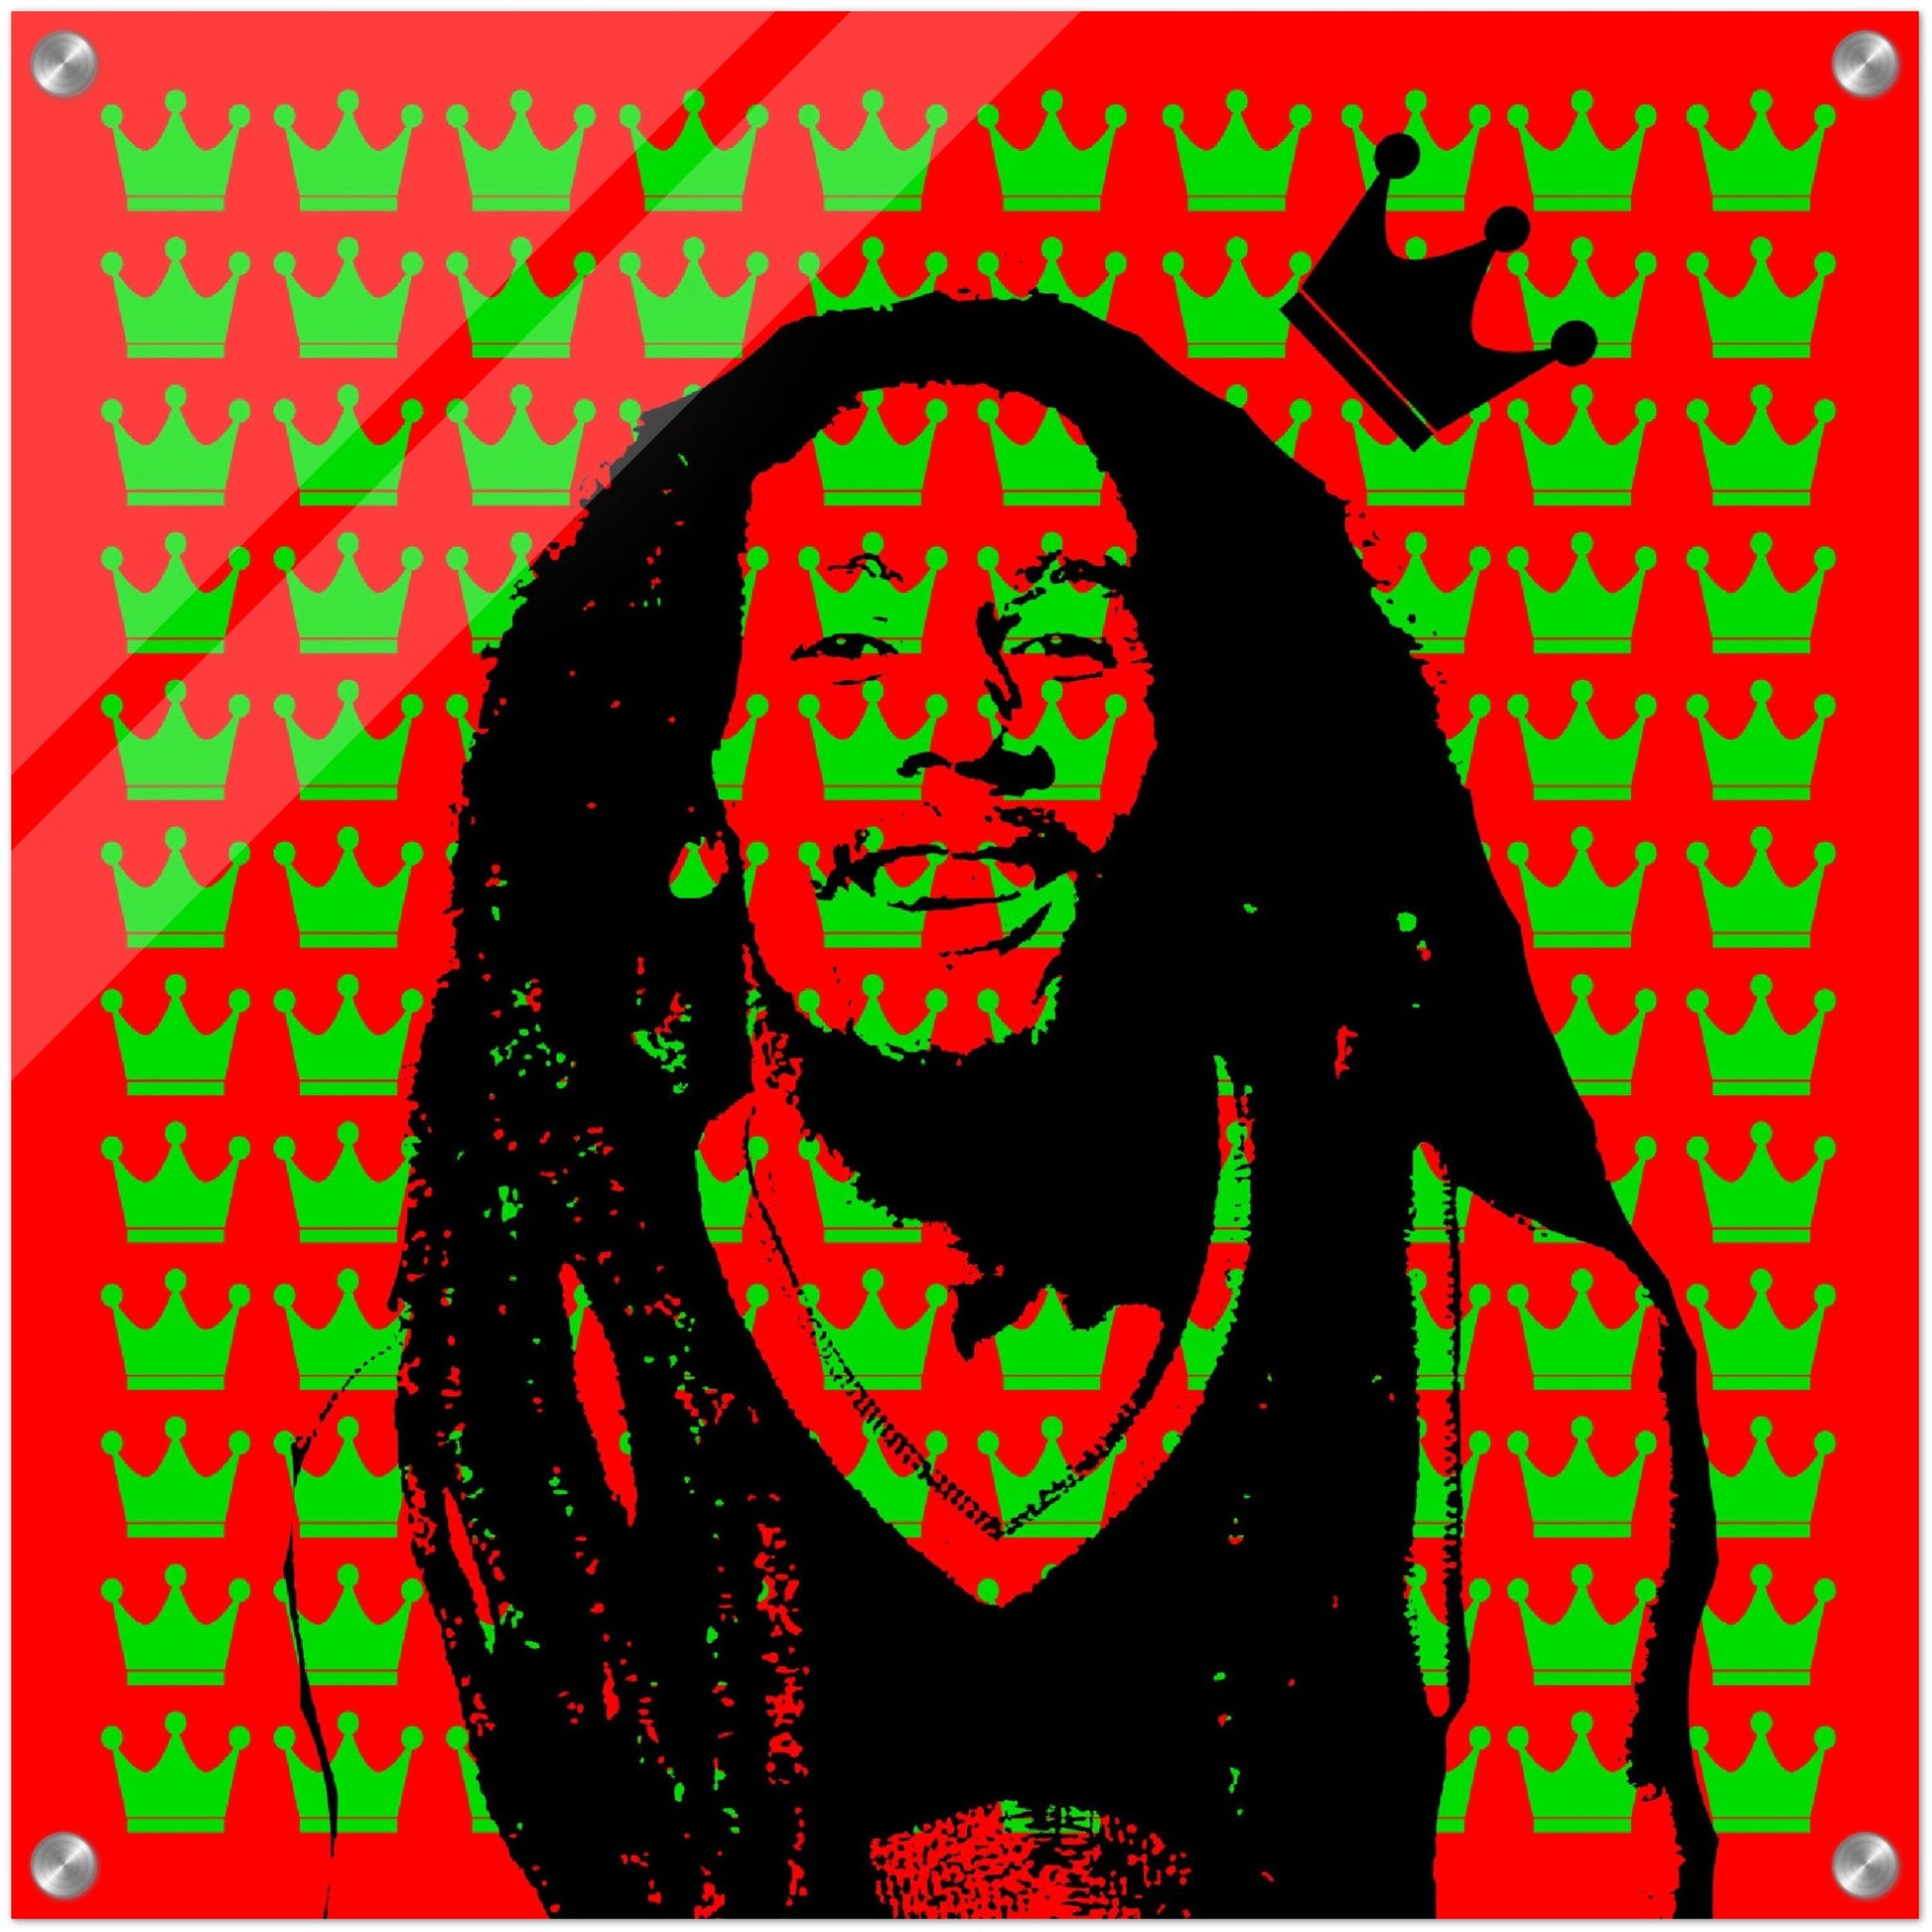 Bob Marley - Kings & Queens Series - Kunstdruck auf Acrylglas Art Loft